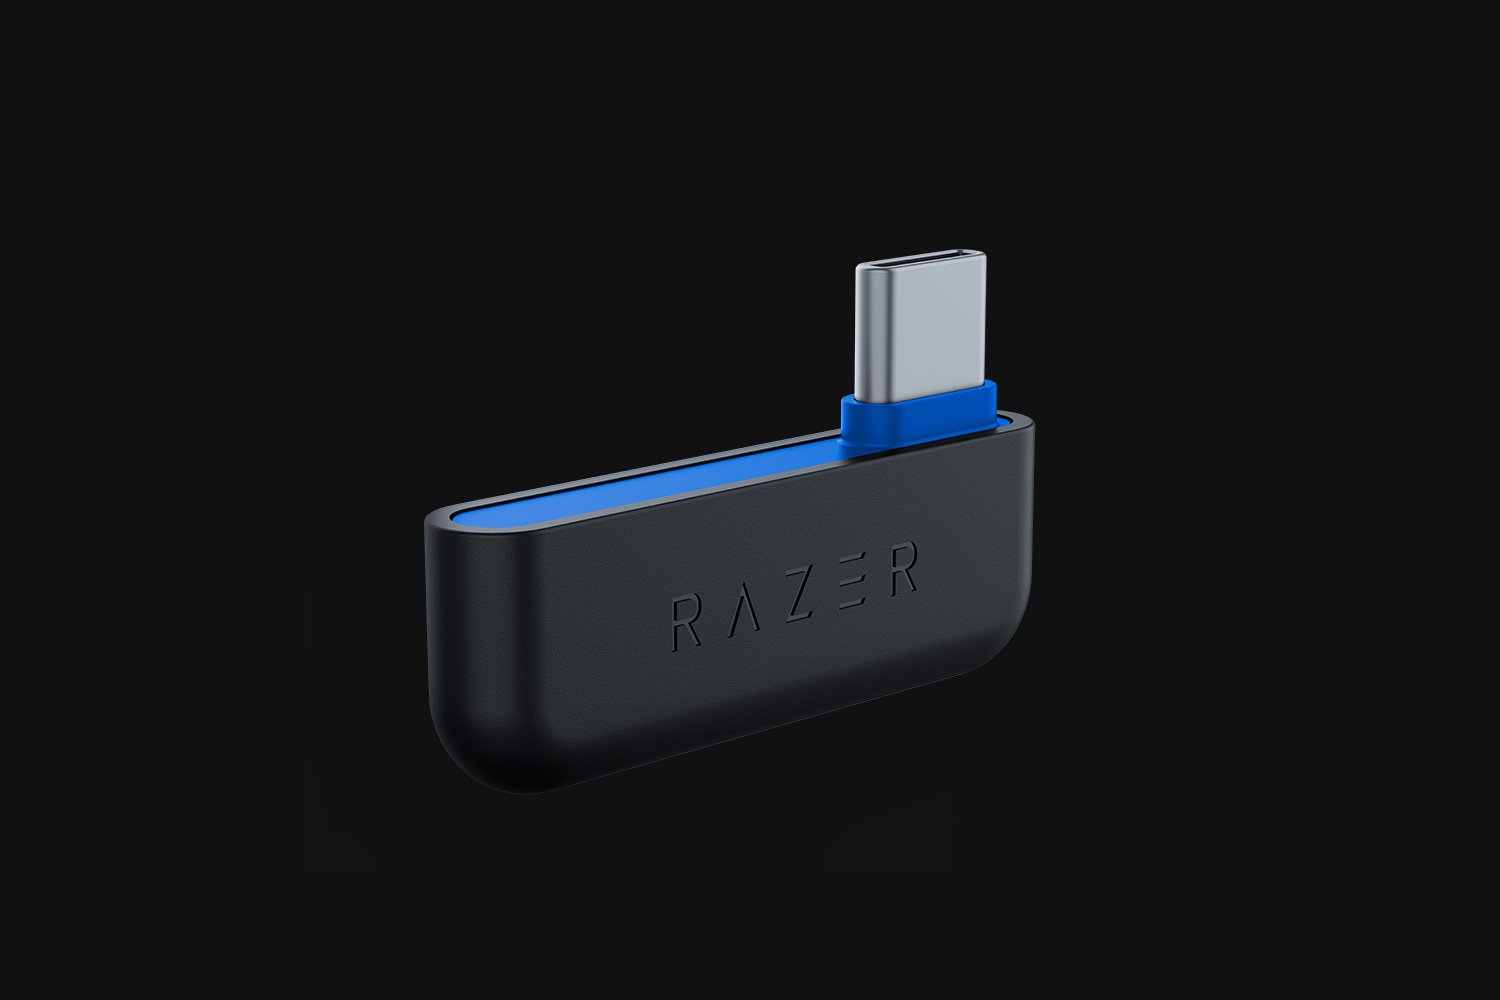 Razer Hammerhead HyperSpeed - PlayStation Licensed Wireless Multi-Platform Gaming Earbuds